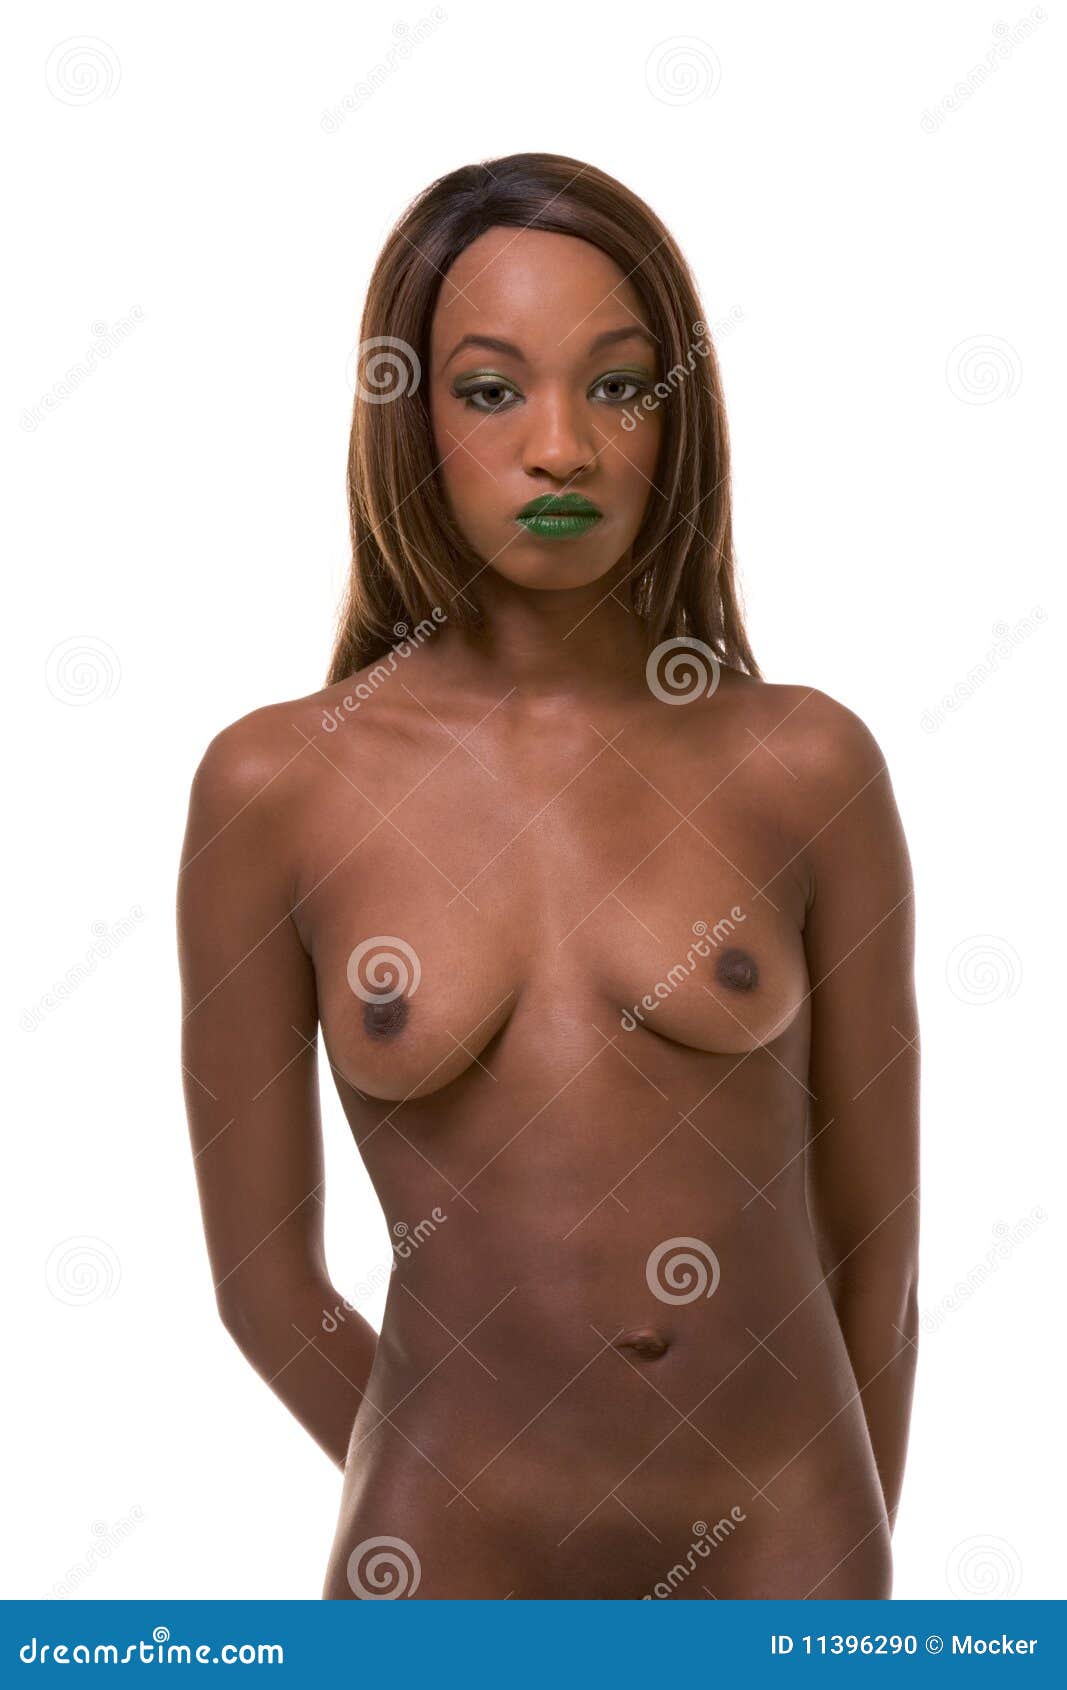 women topless black